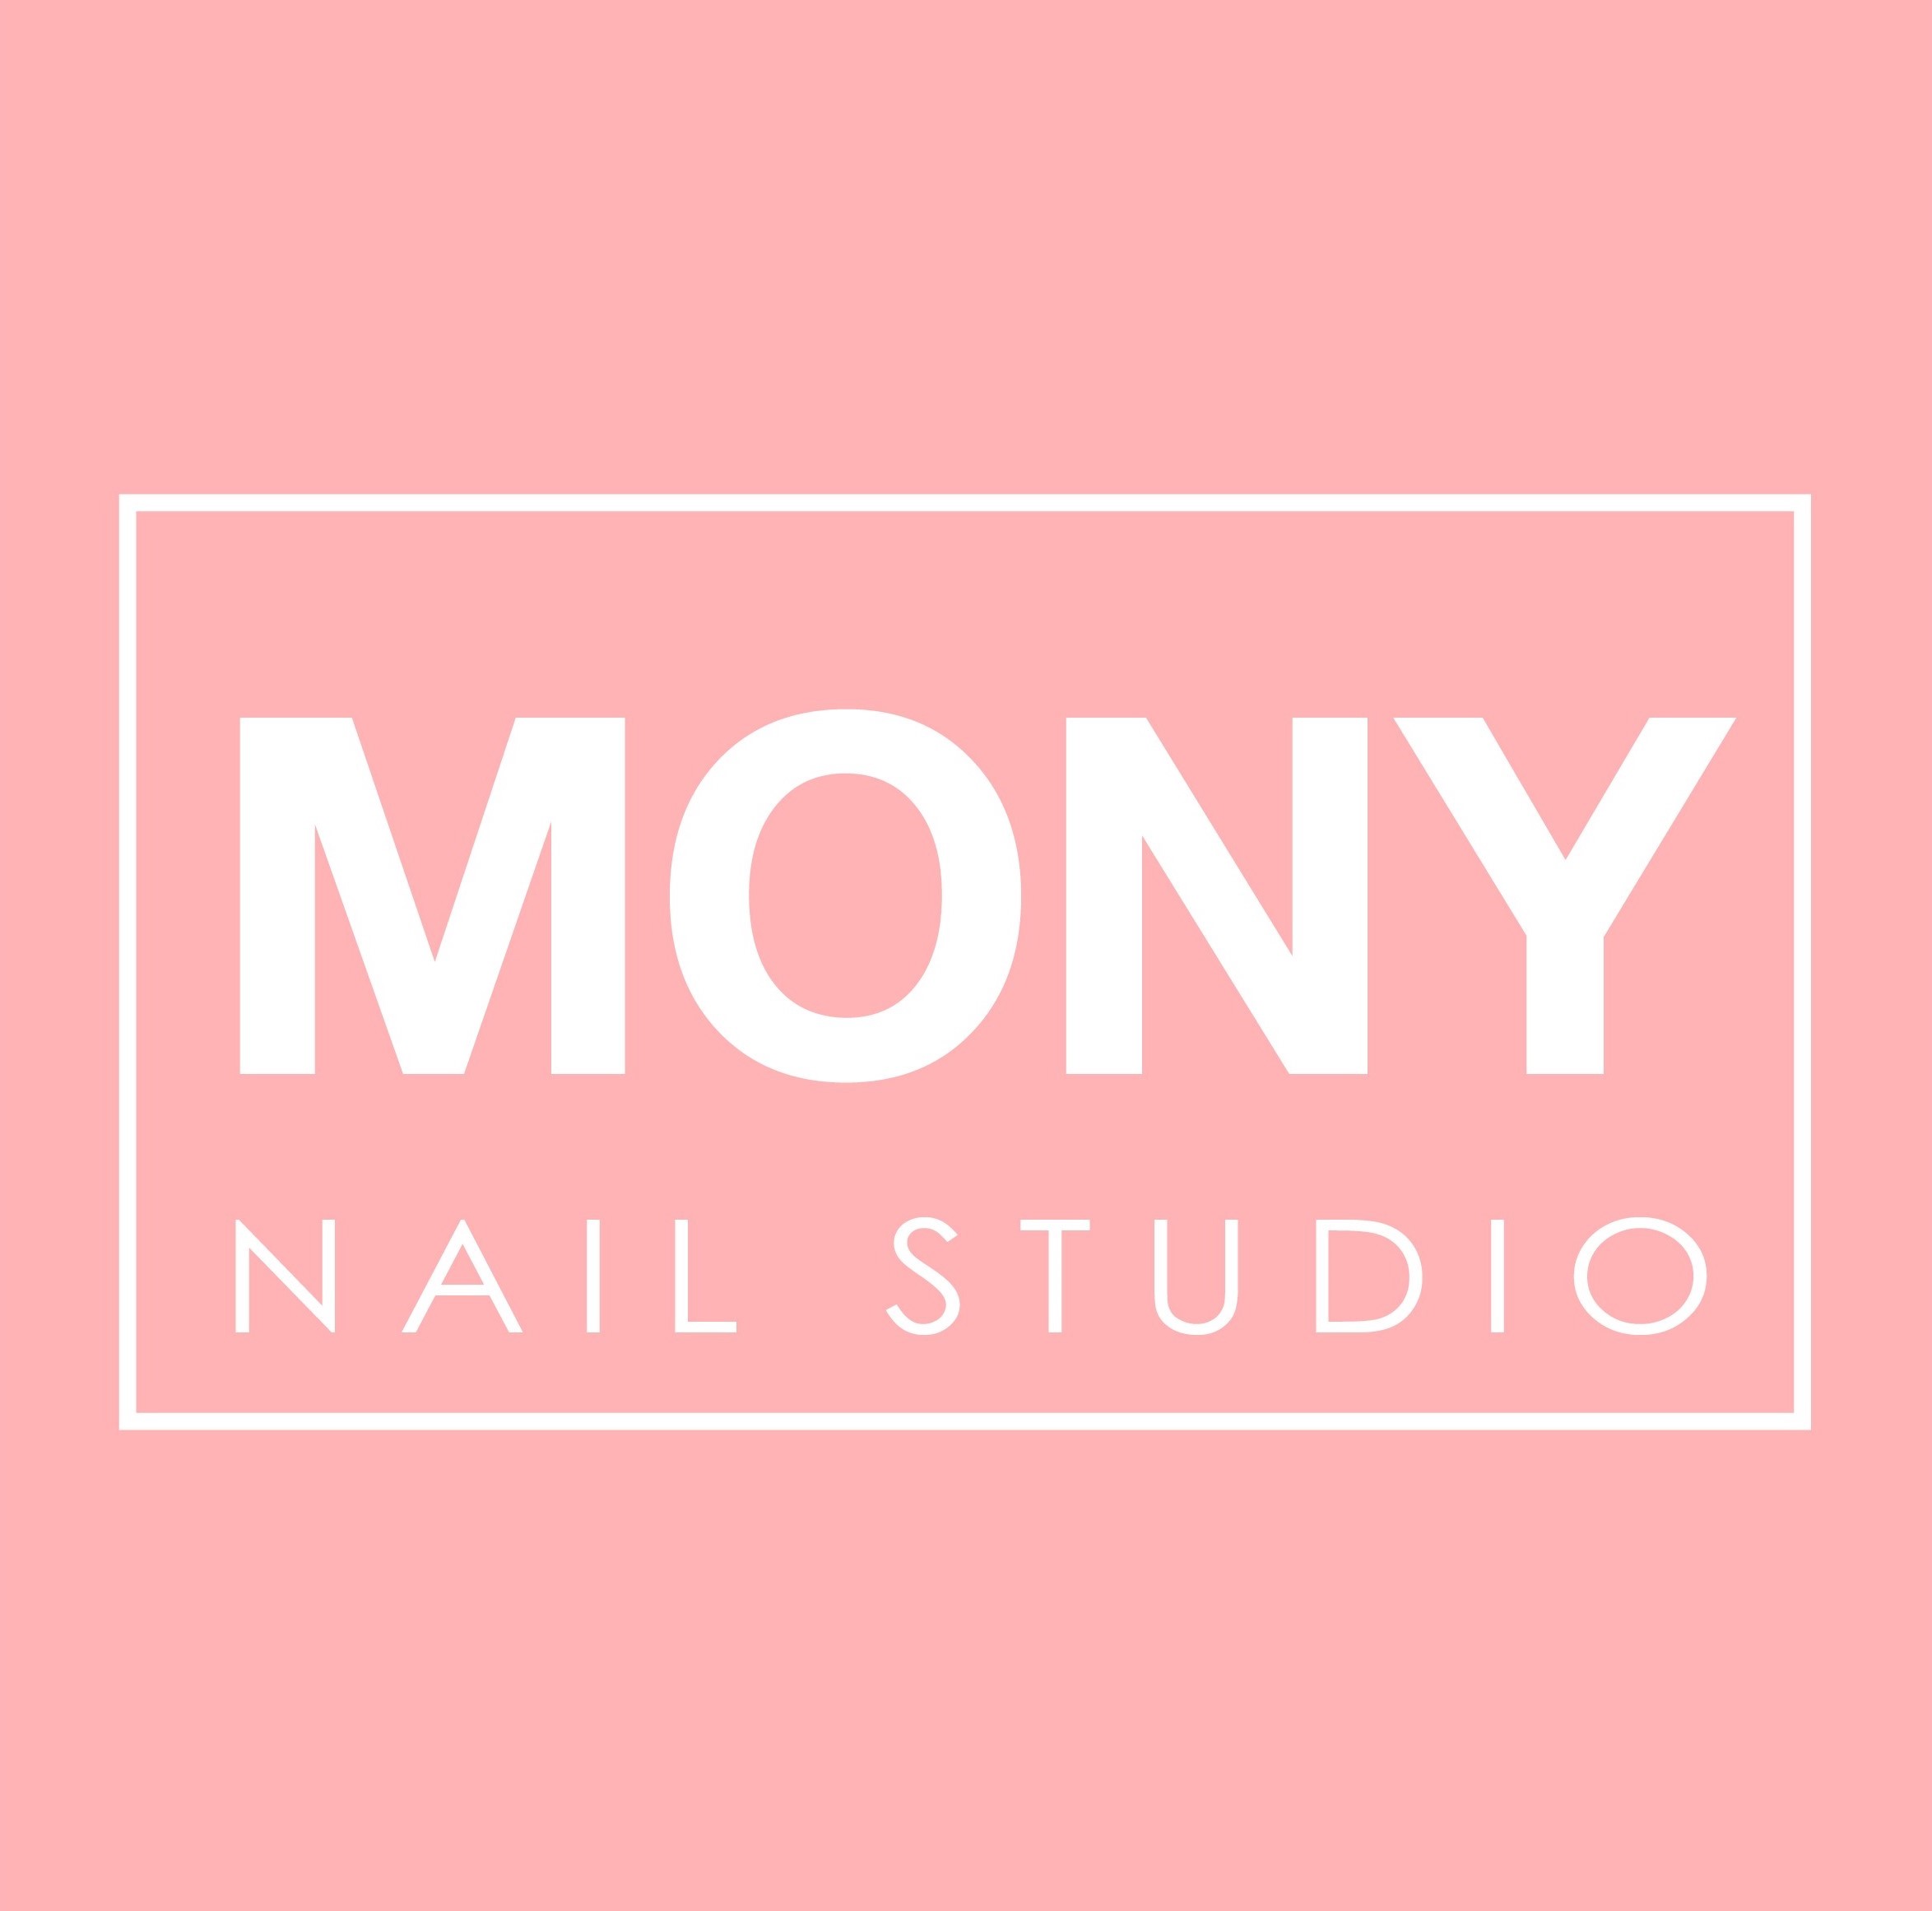 MONY NAIL STUDIO